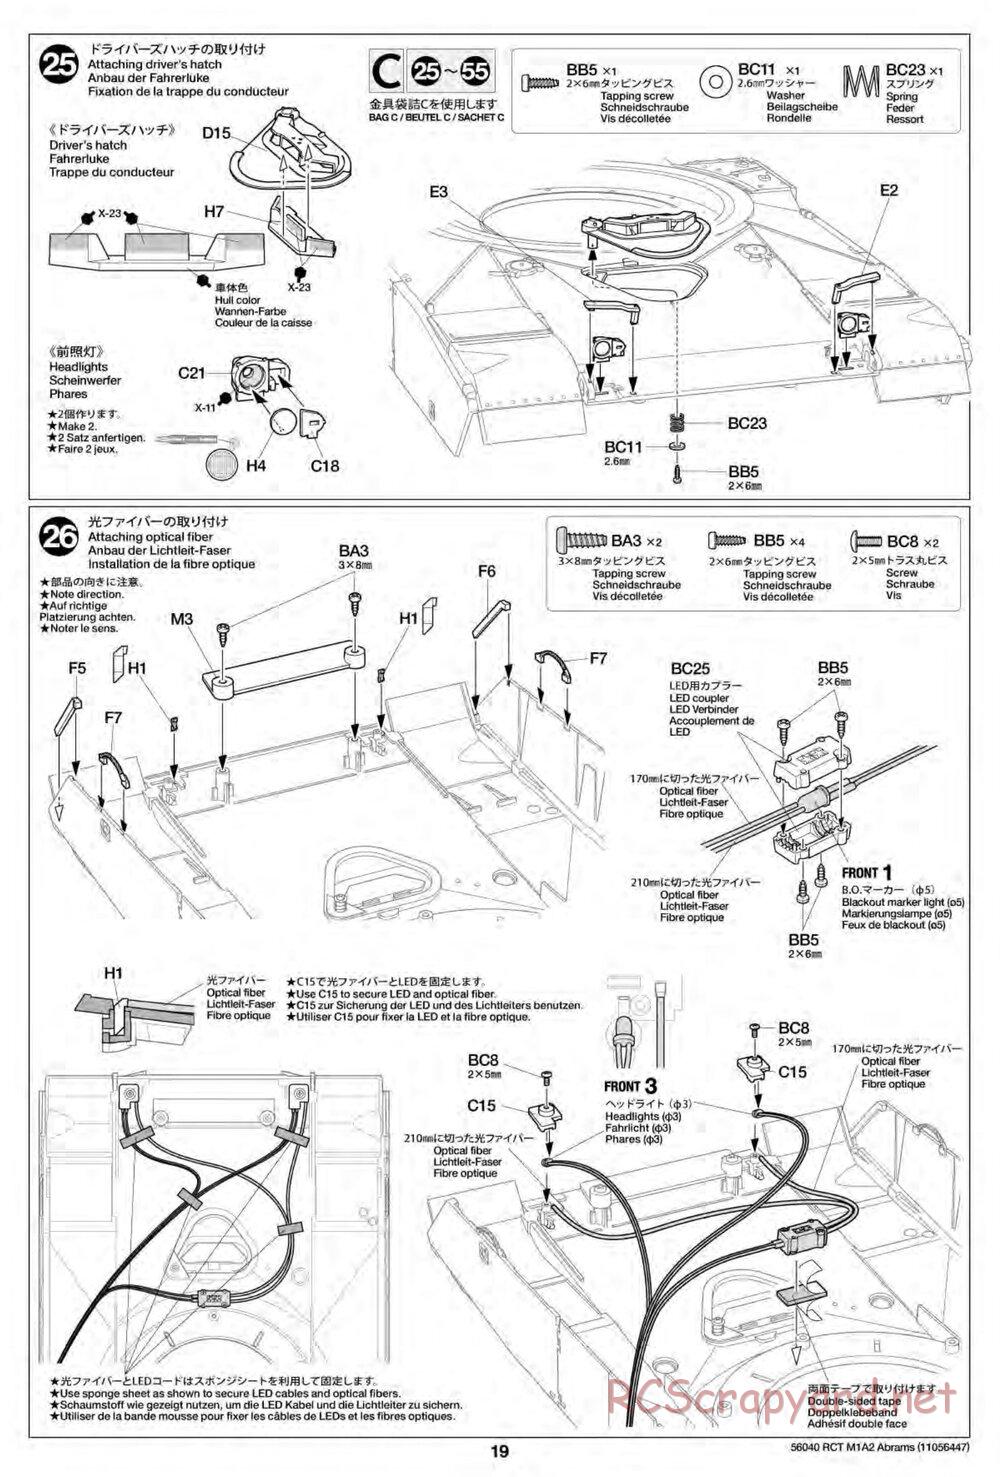 Tamiya - U.S. Main Battle Tank M1A2 Abrams - 1/16 Scale Chassis - Manual - Page 19